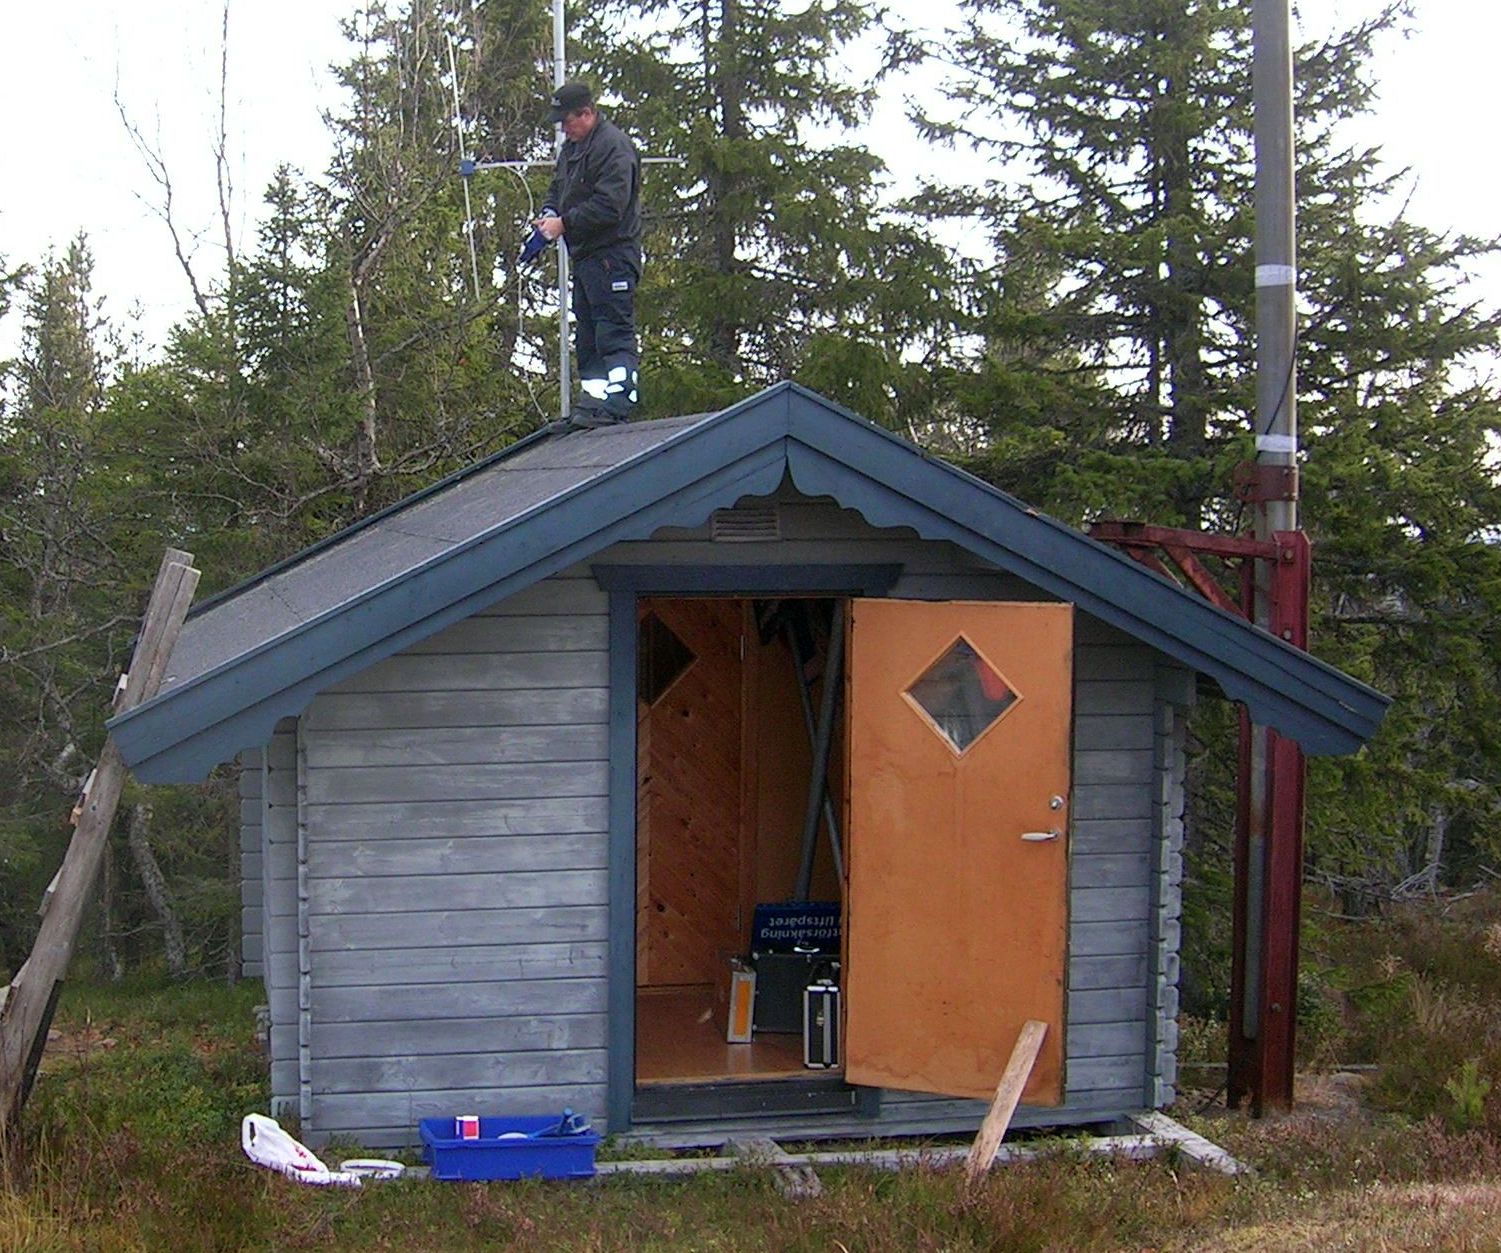 The new radio cottage , André mounts some community radio antenna